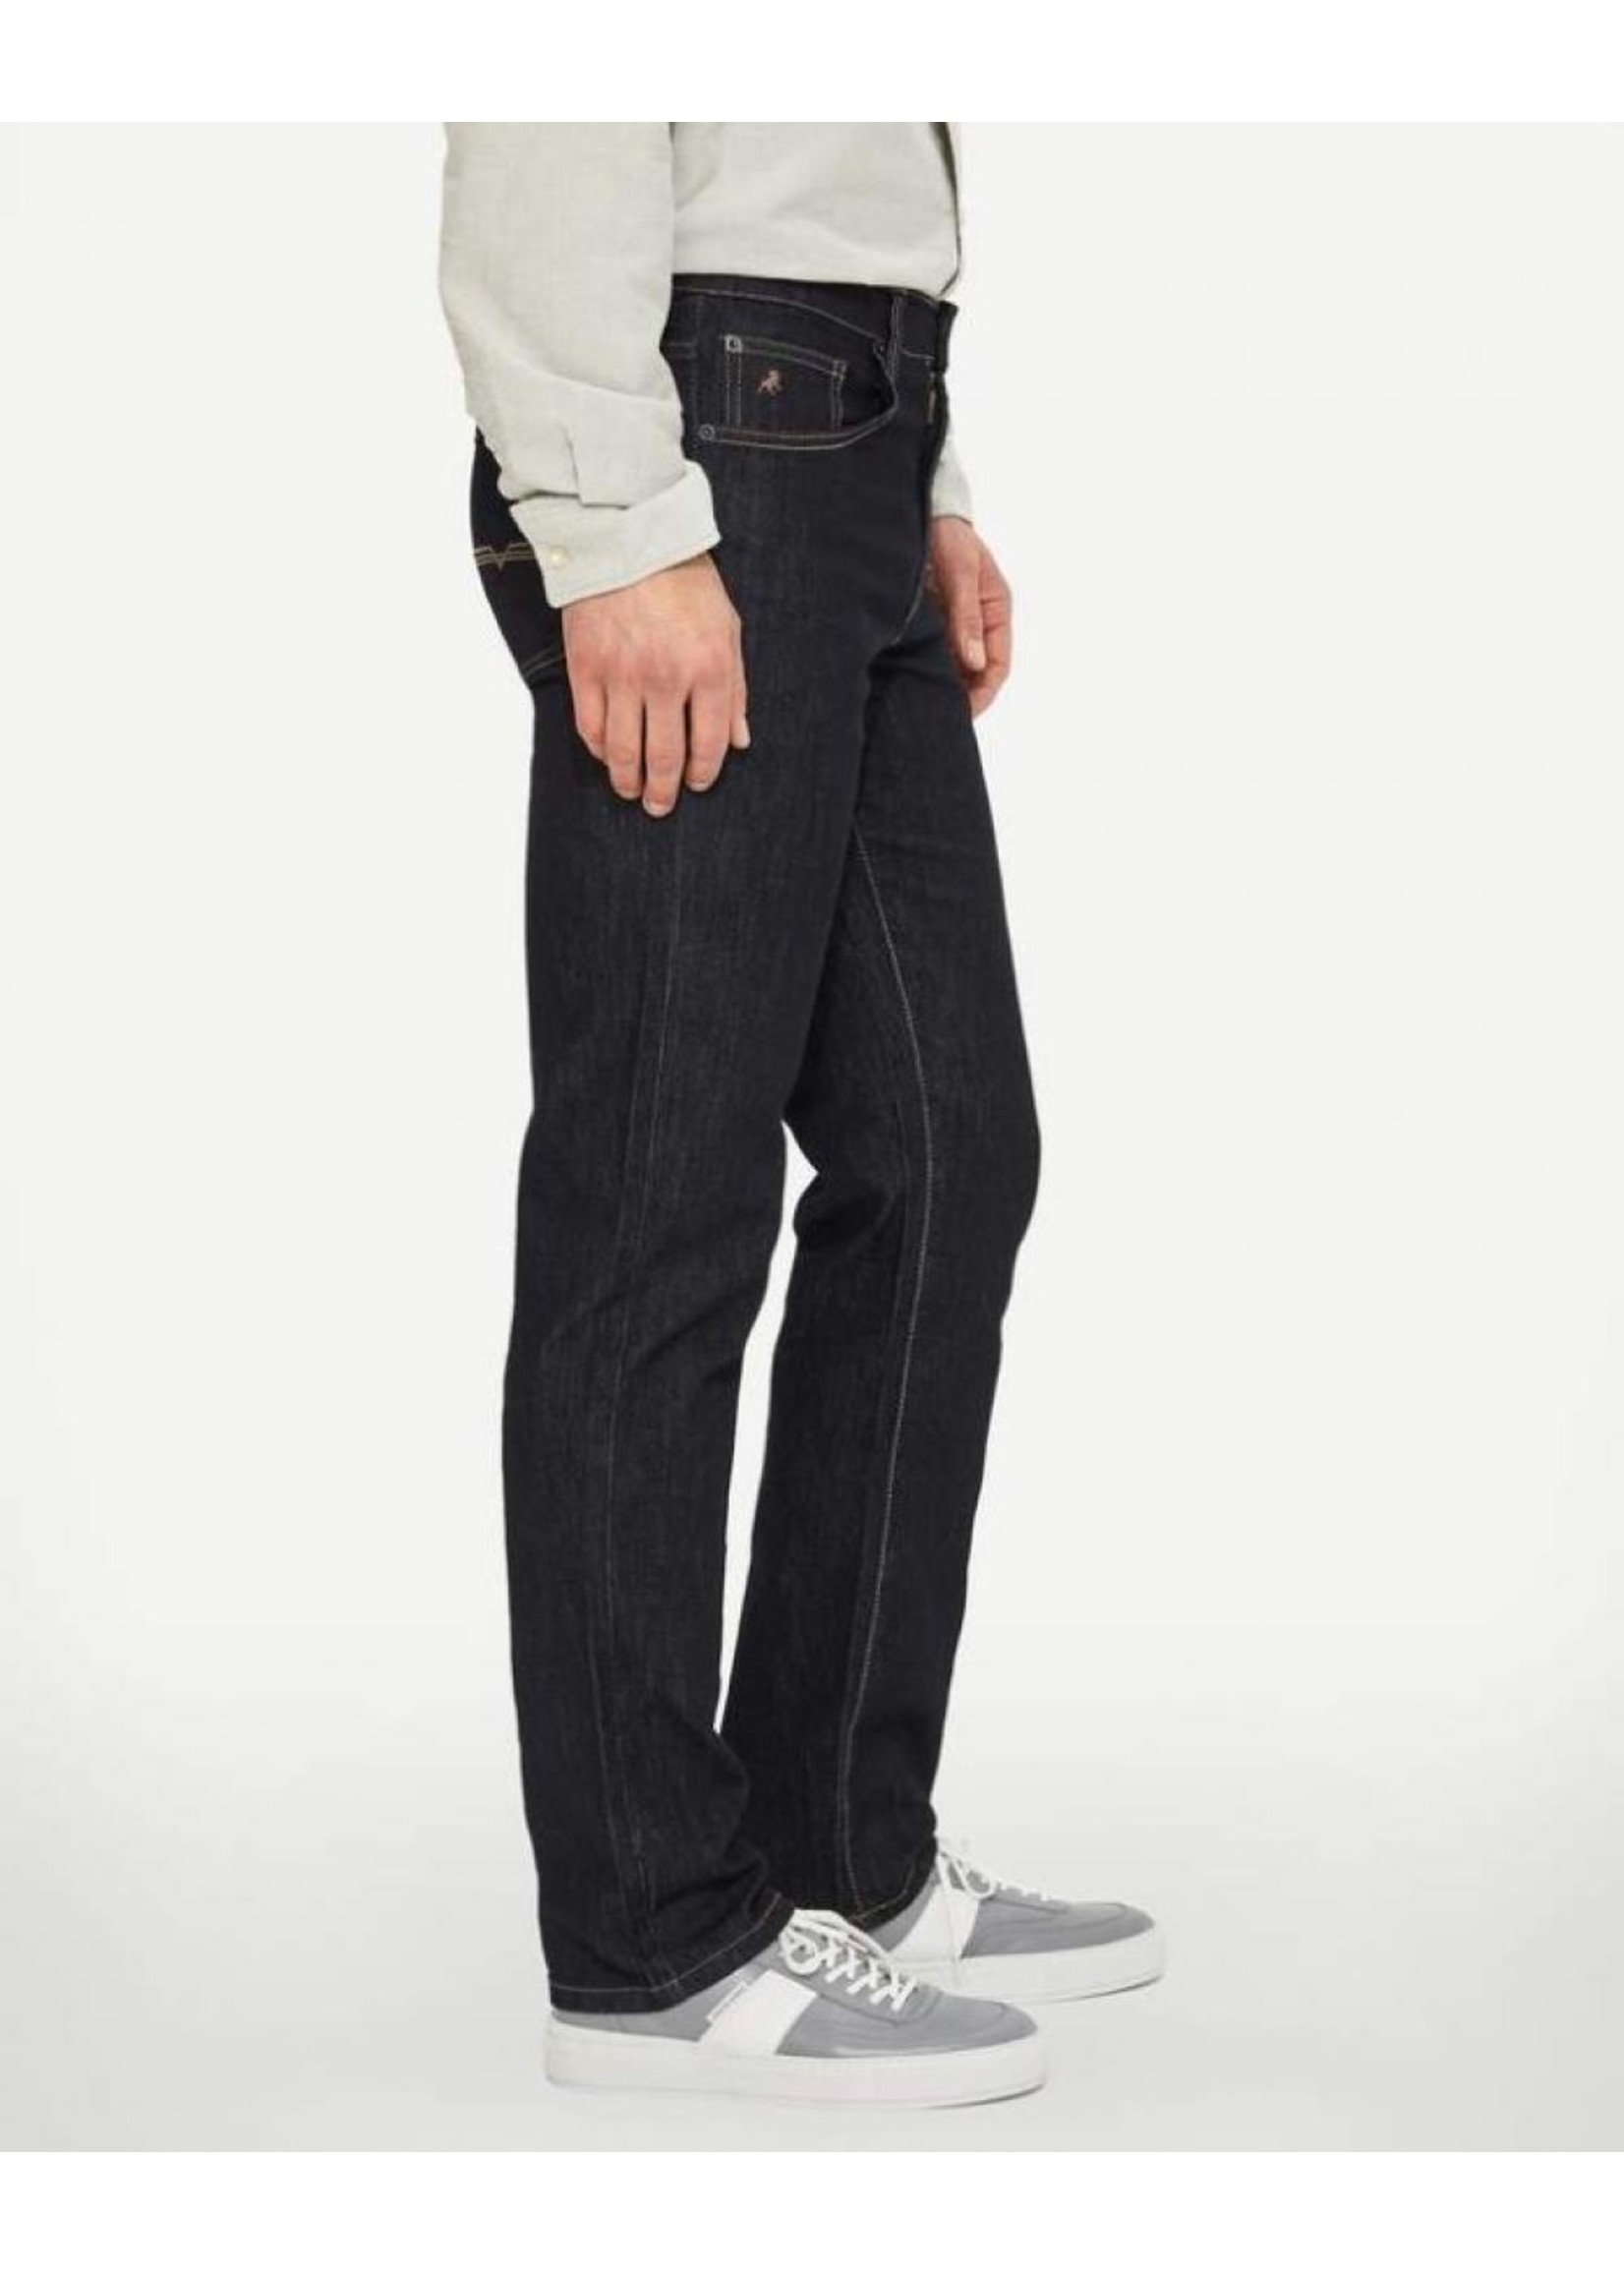 LOIS JEANS & JACKETS Men's traditional regular rize Brad jeans